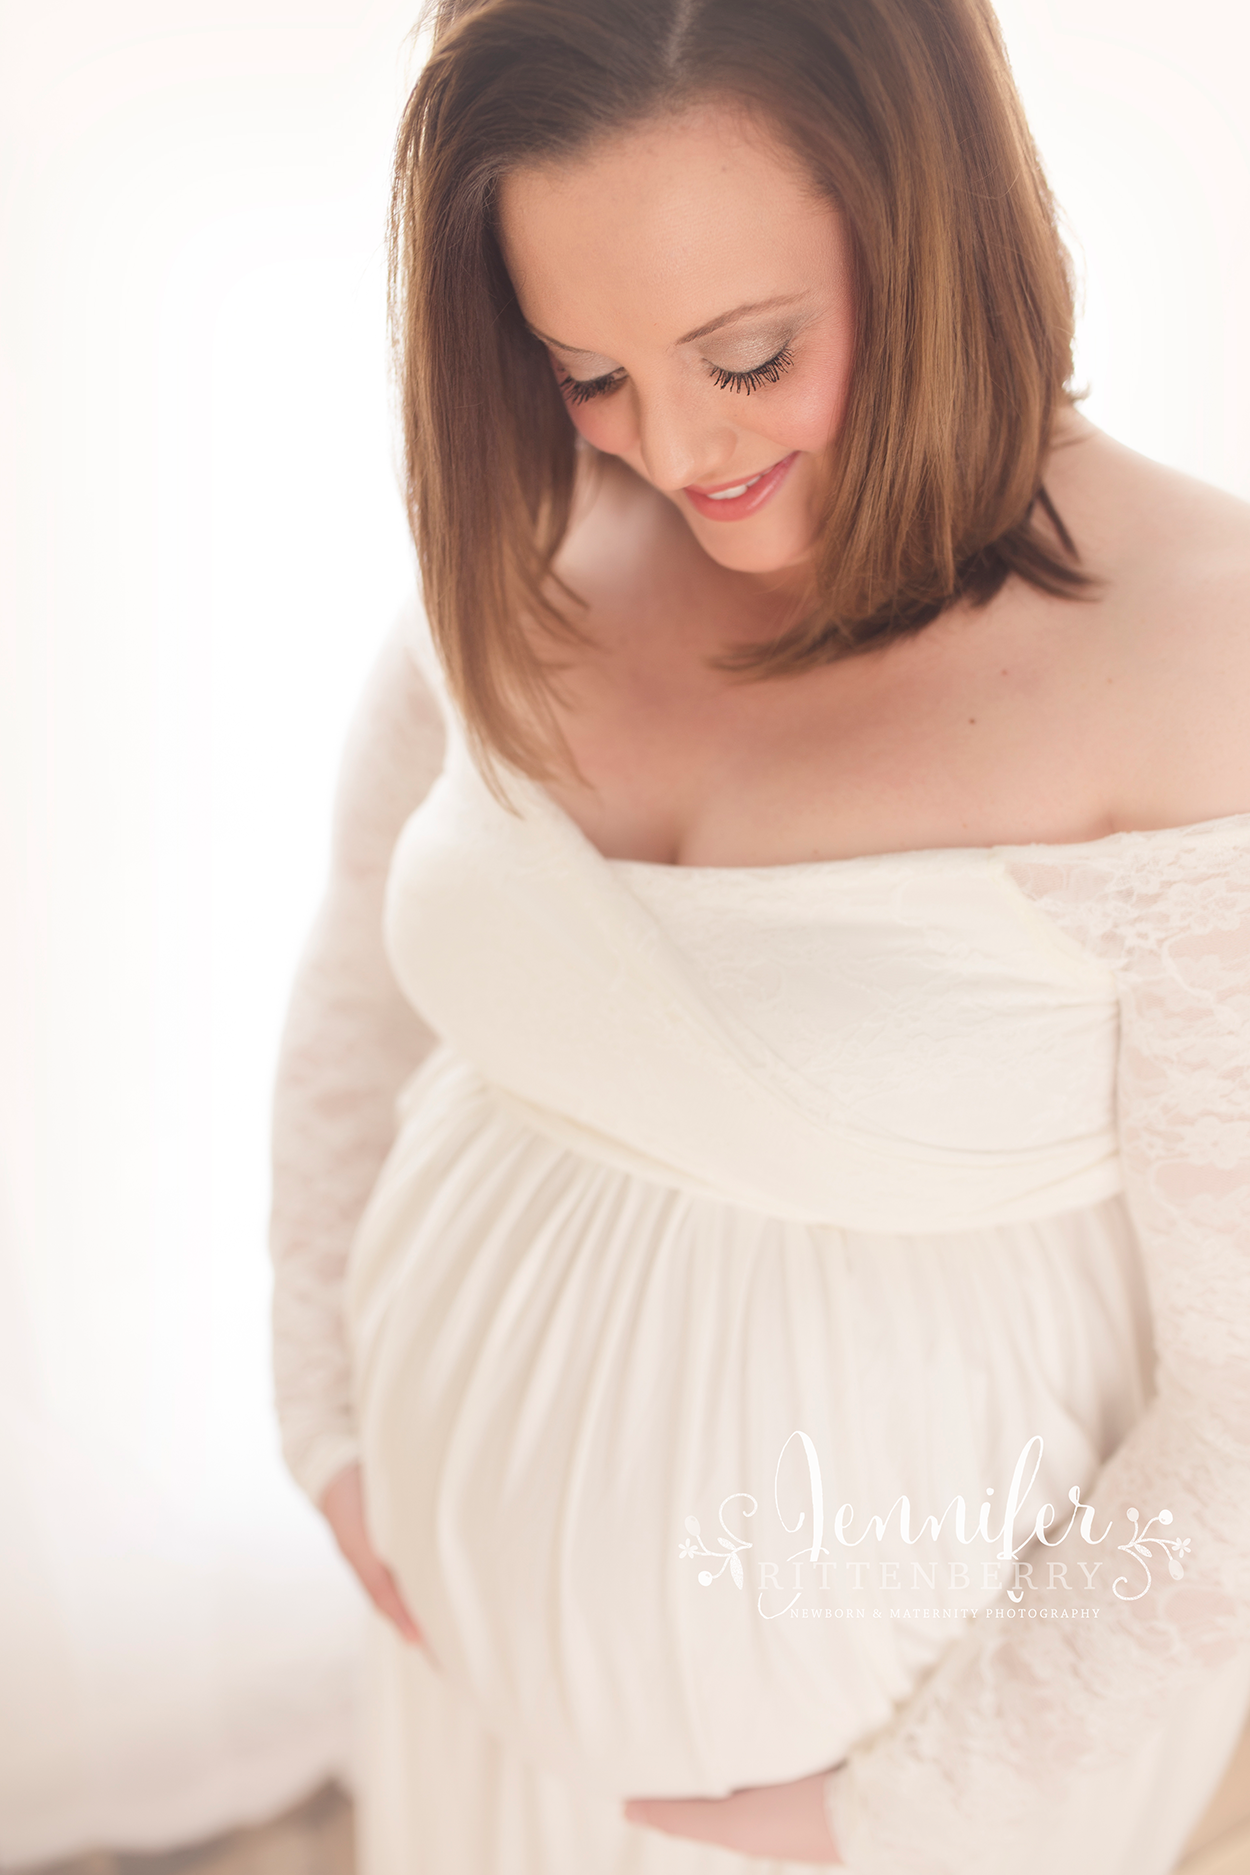 Jennifer-Rittenberry-Photography-Niehaus-Maternity-Session3P9B2917